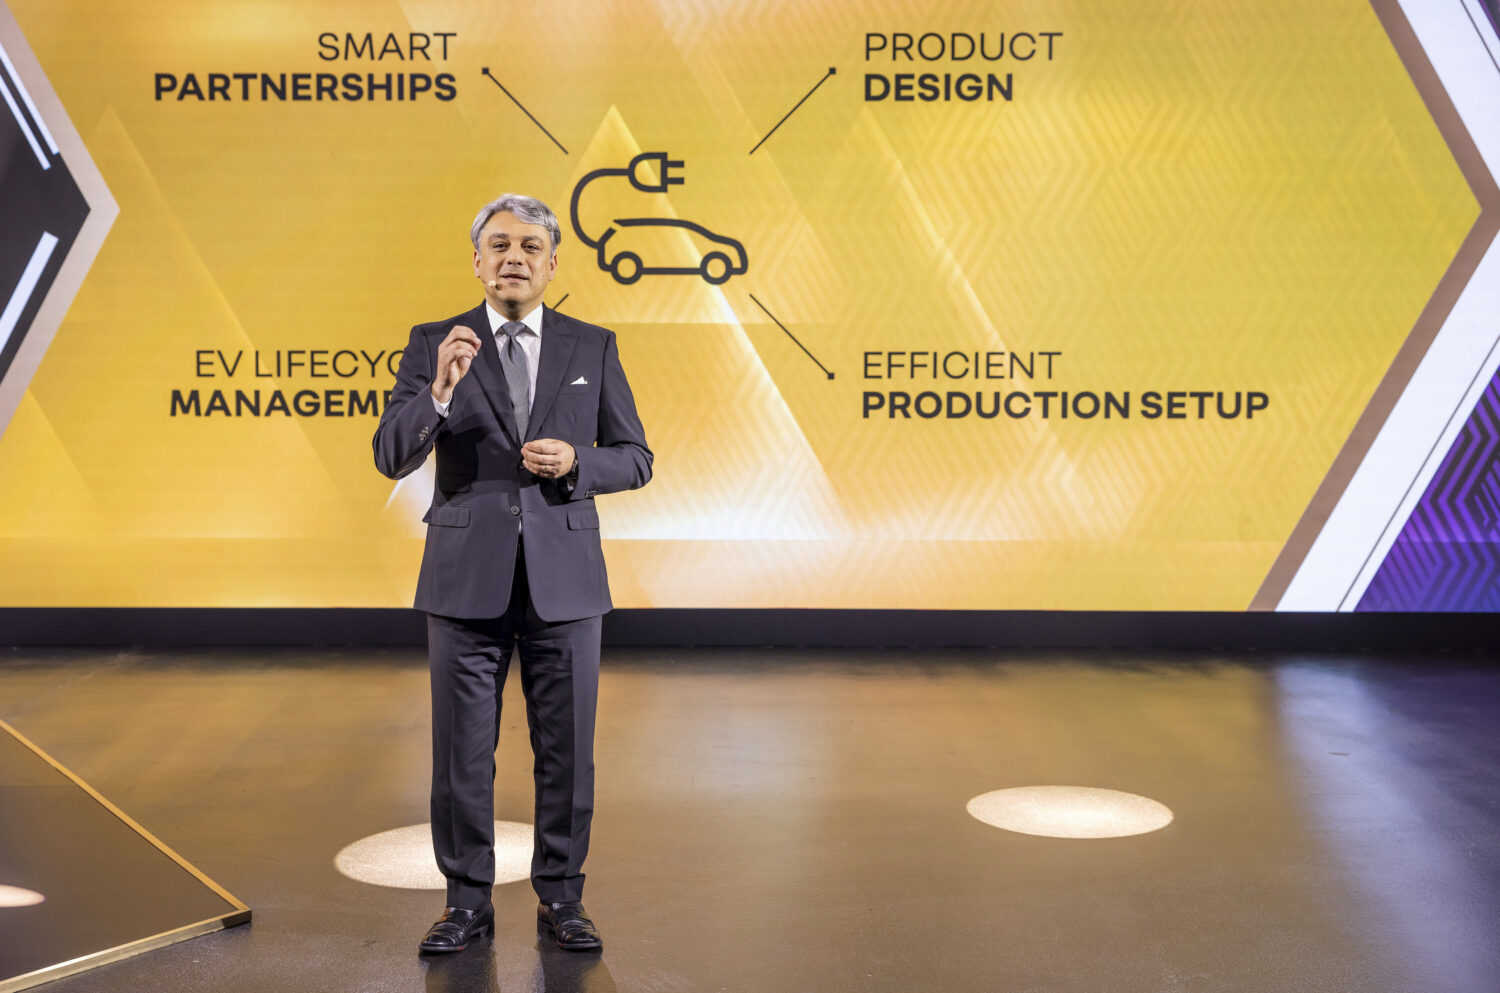 2021 - Renault eWays press conference